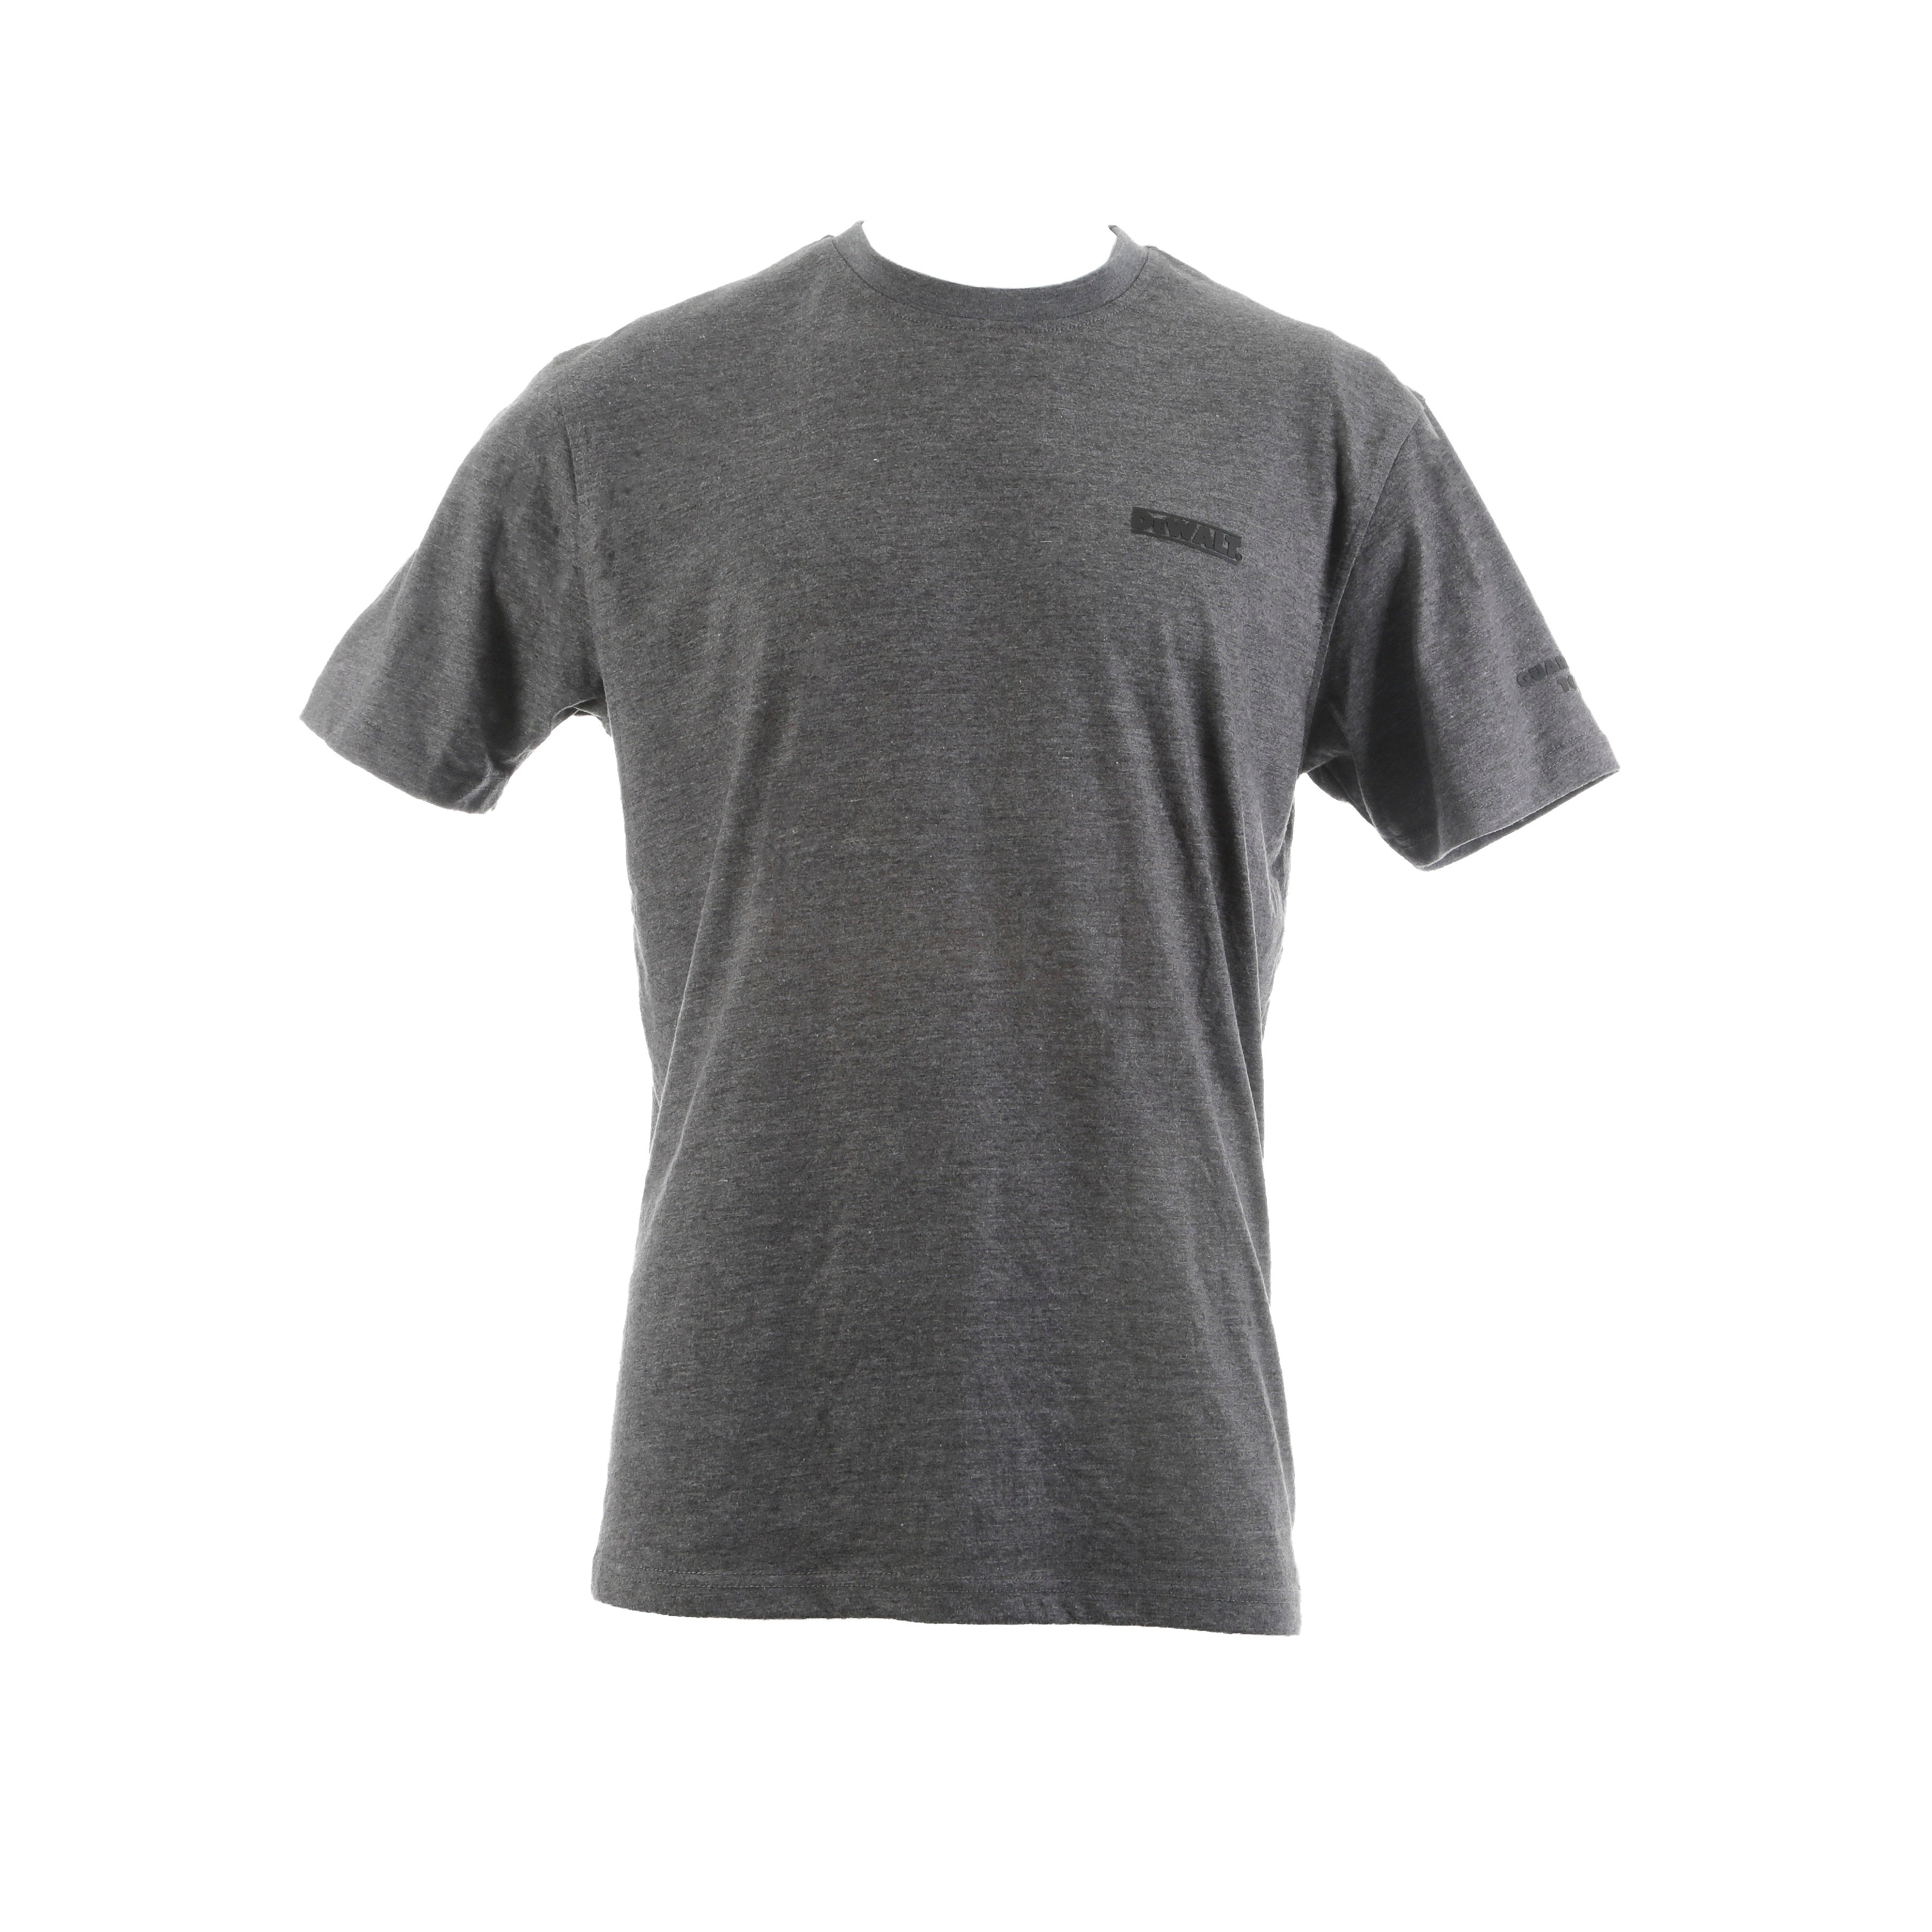 DeWalt Typhoon - Charcoal Grey T-Shirt